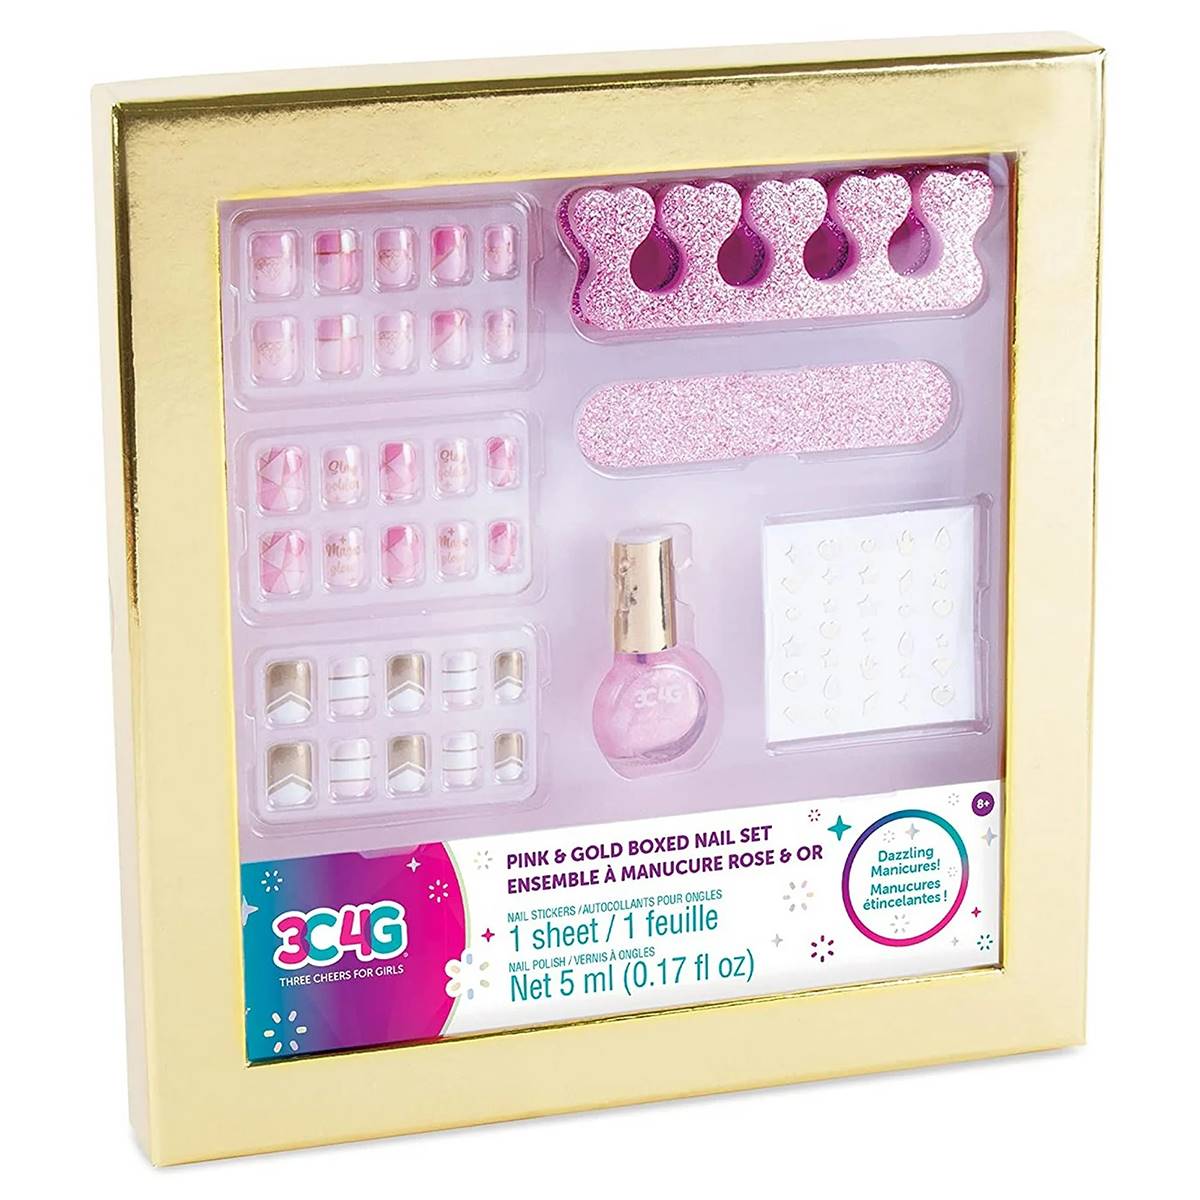 Girls 3C4G Pink & Gold Boxed Nail Set